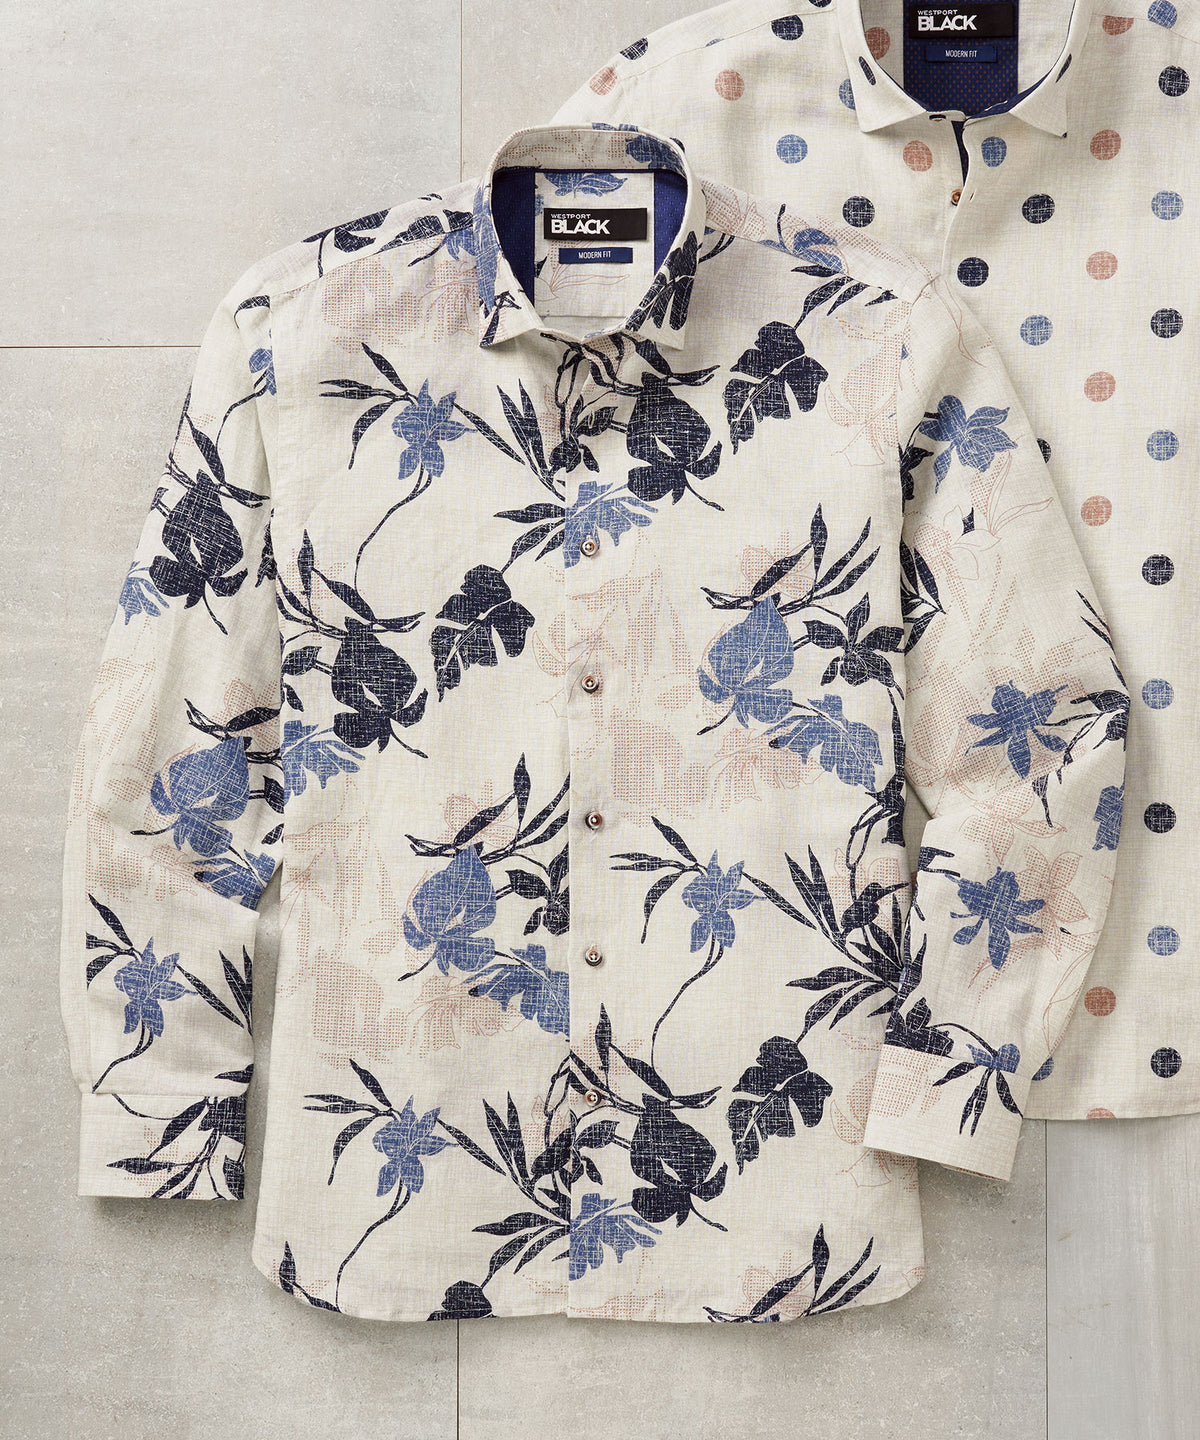 Westport Black Long Sleeve Spread Collar Tropical Flower Print Sport Shirt, Men's Big & Tall